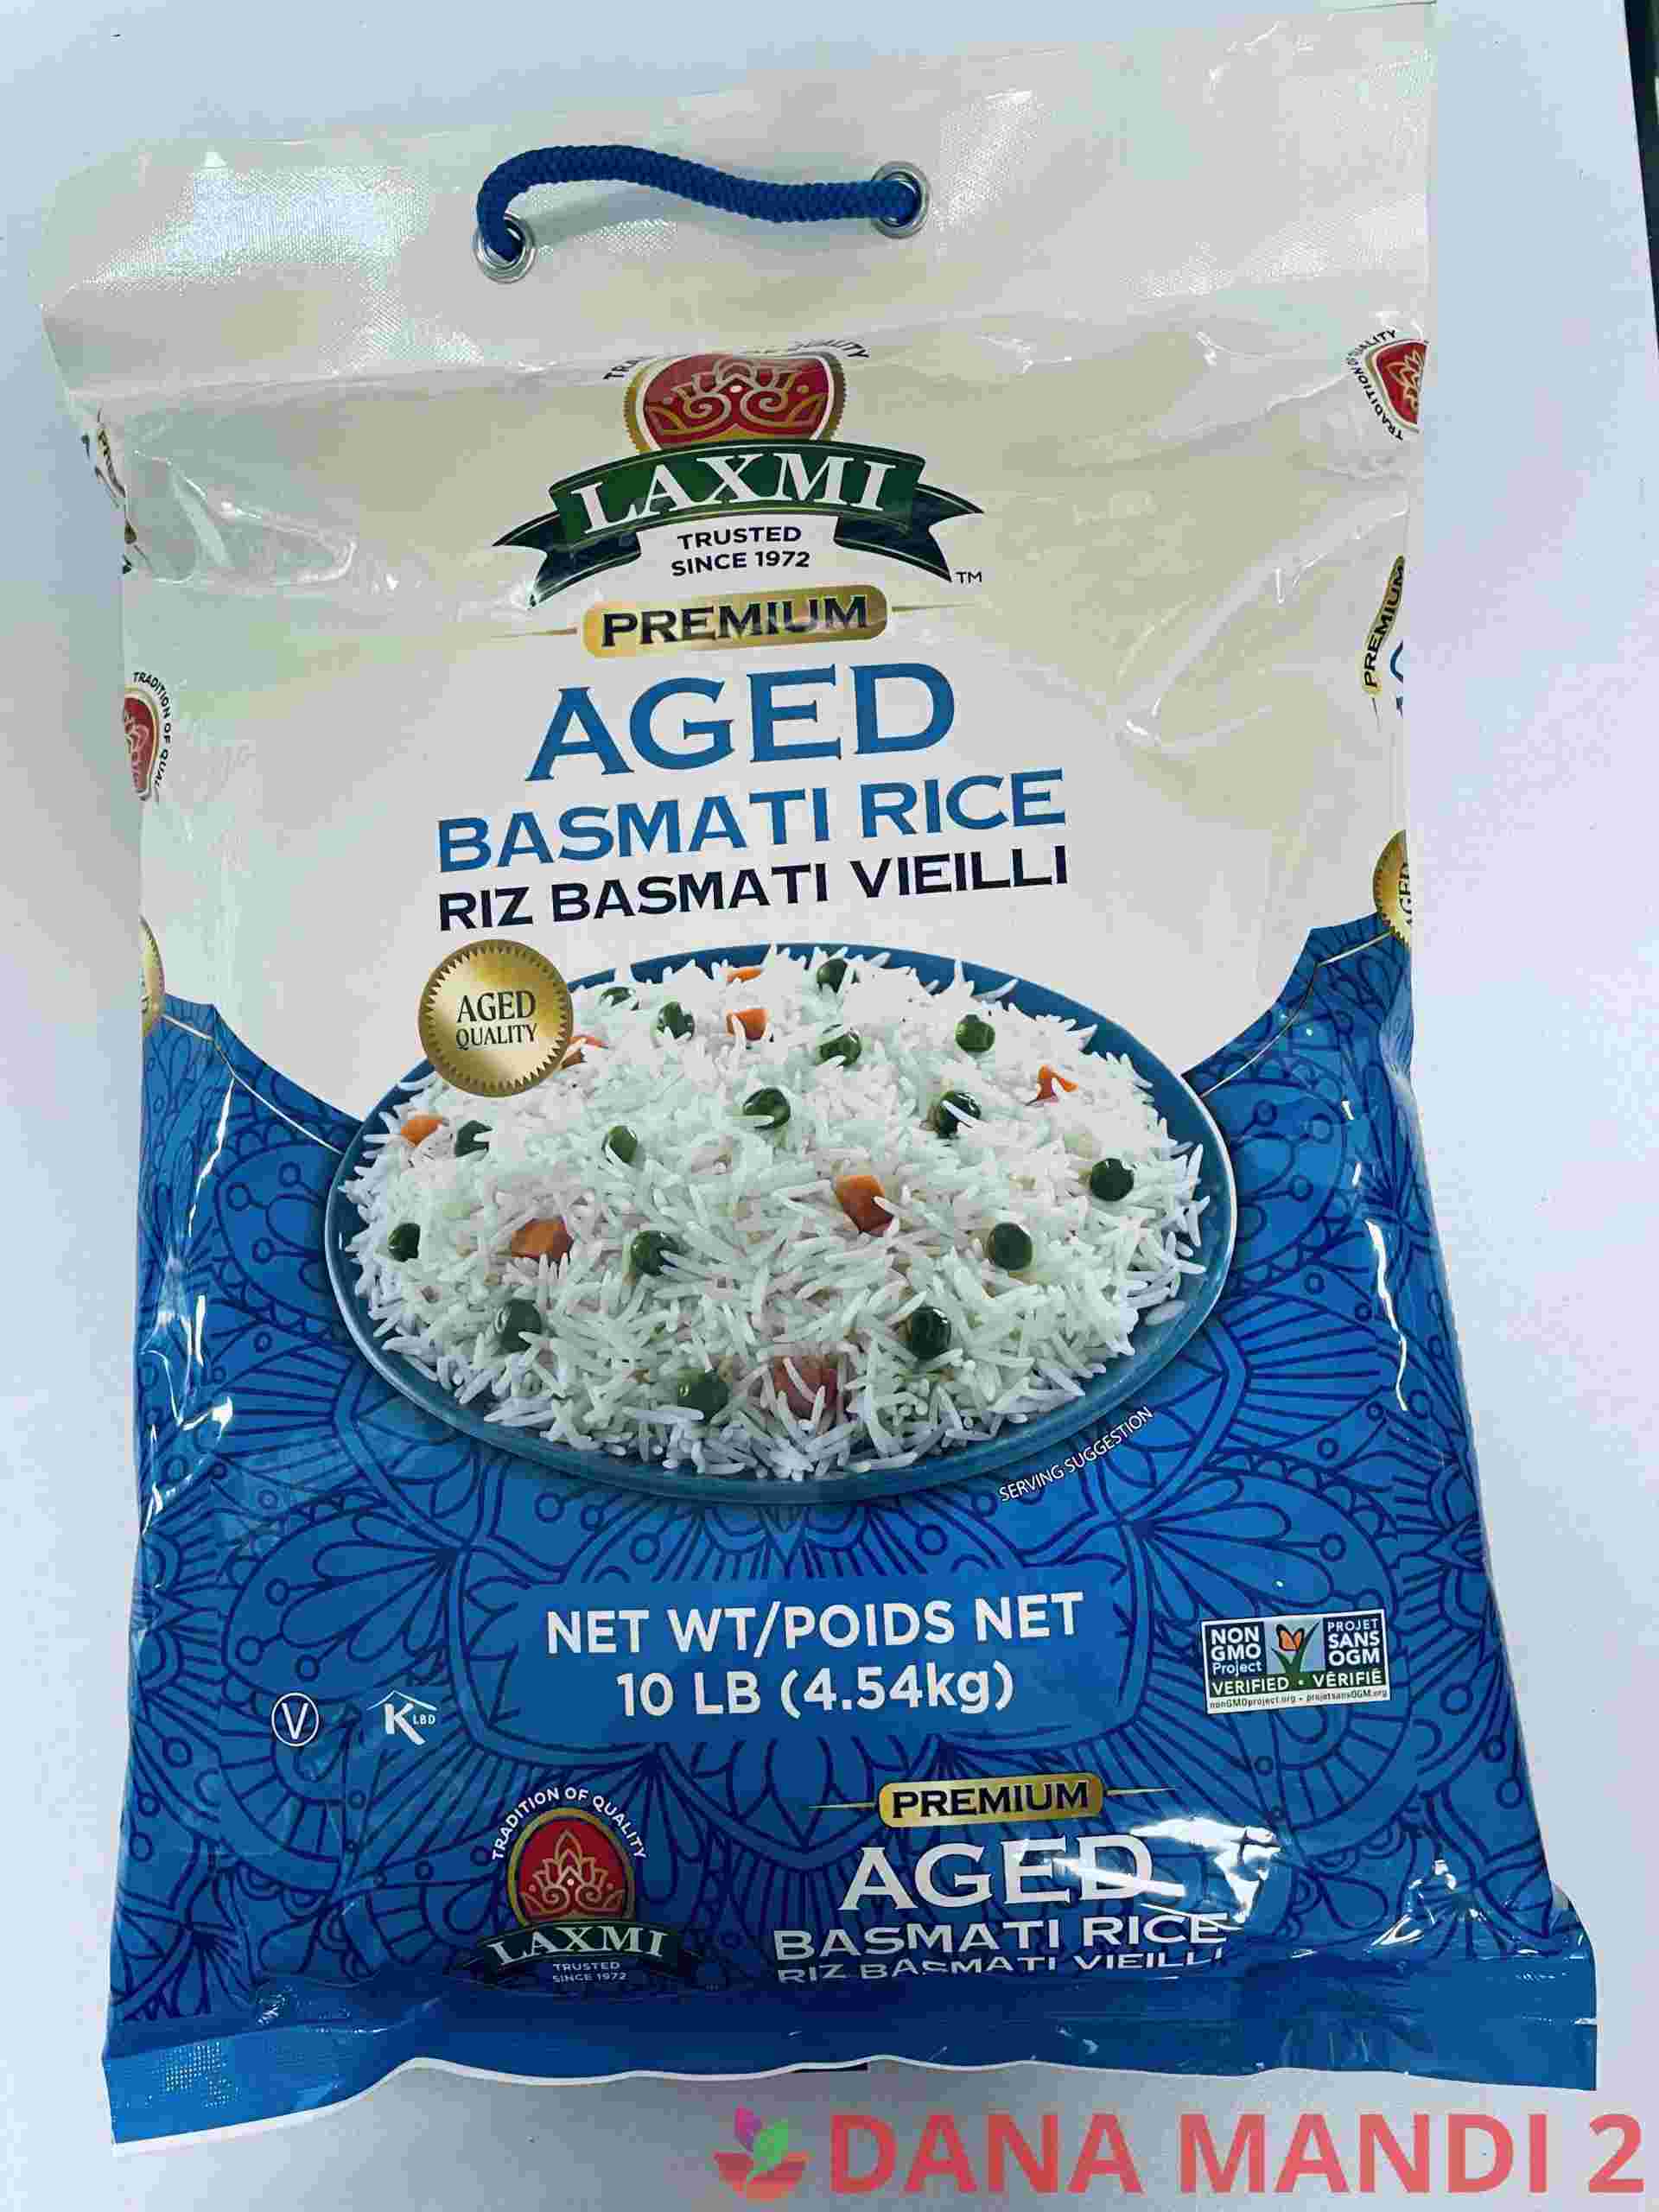 Laxmi Aged Basmati Rice